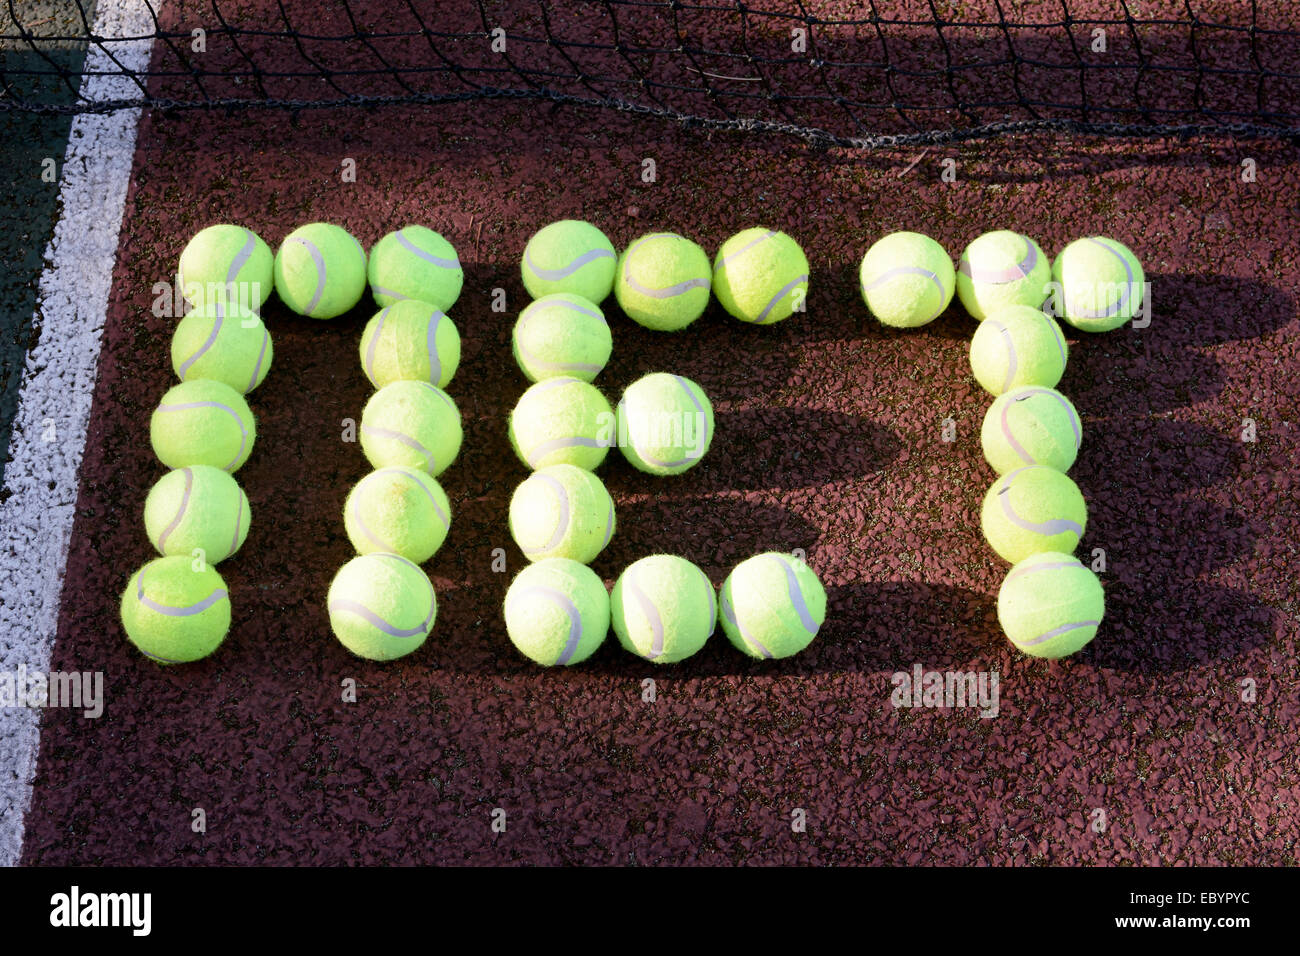 Tennis net made from tennis balls on hard court Stock Photo